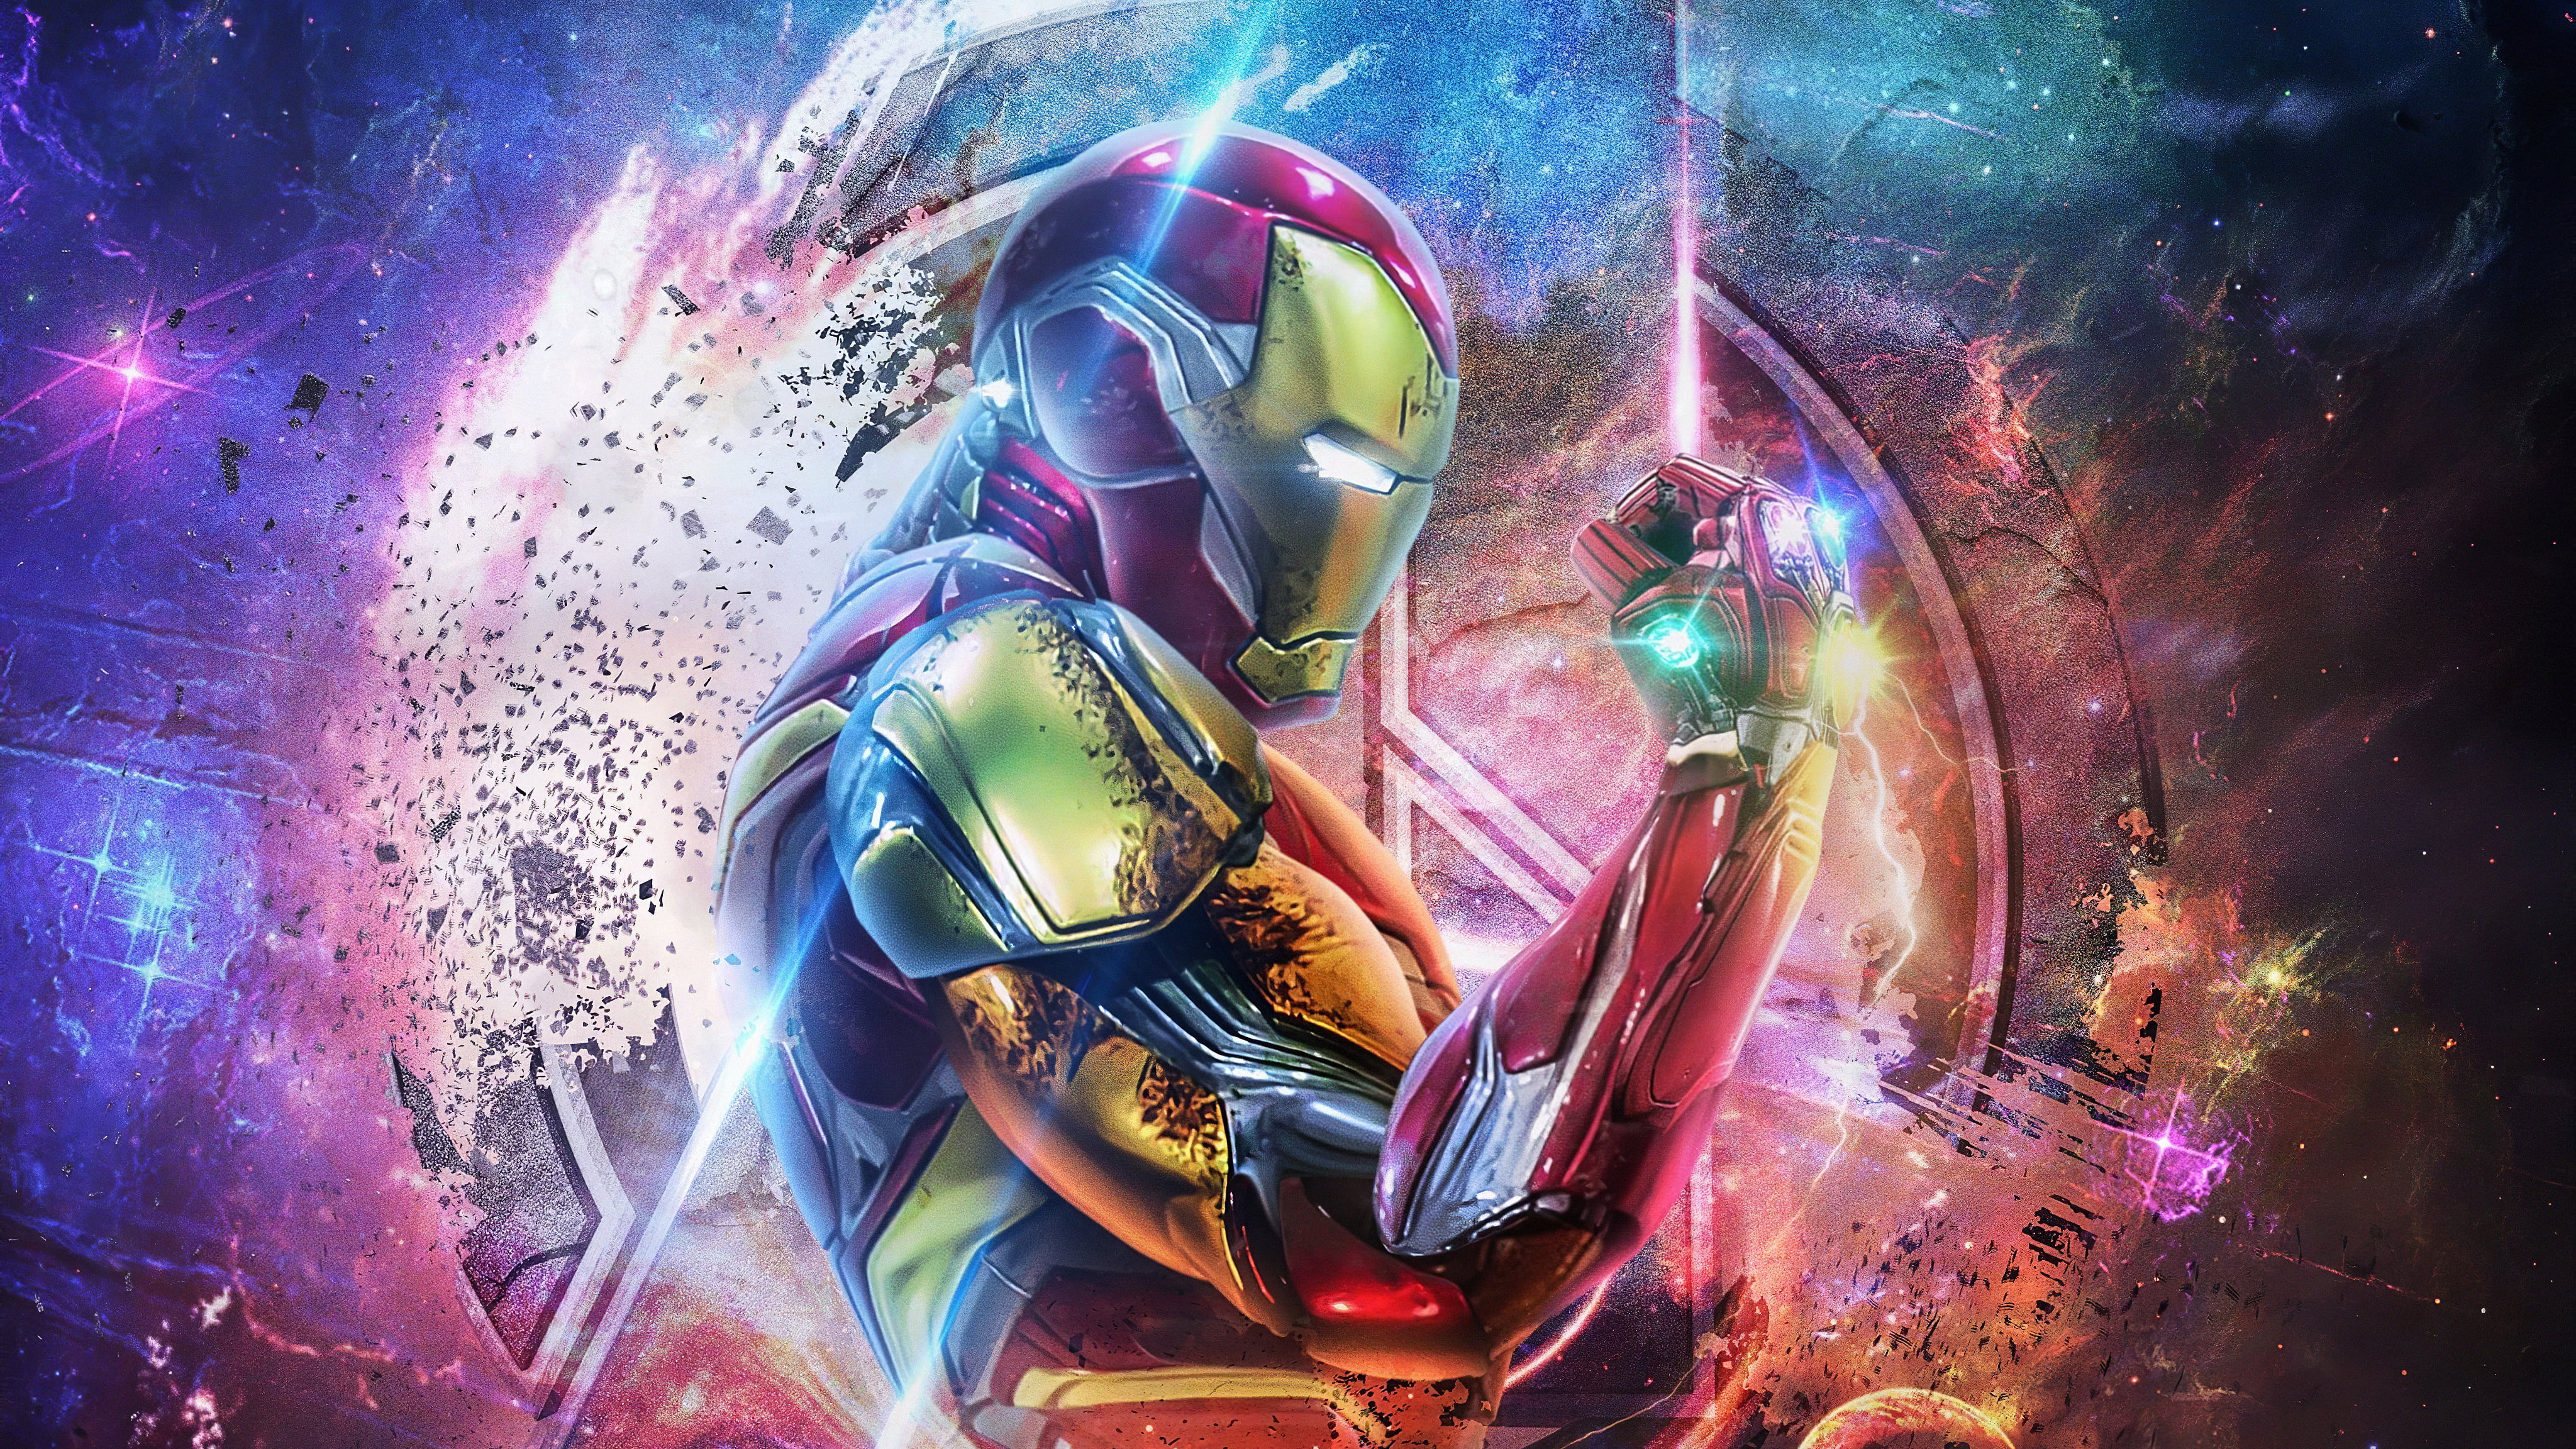 HD wallpaper: The Avengers, Avengers EndGame, Infinity Gauntlet, Iron Man f...